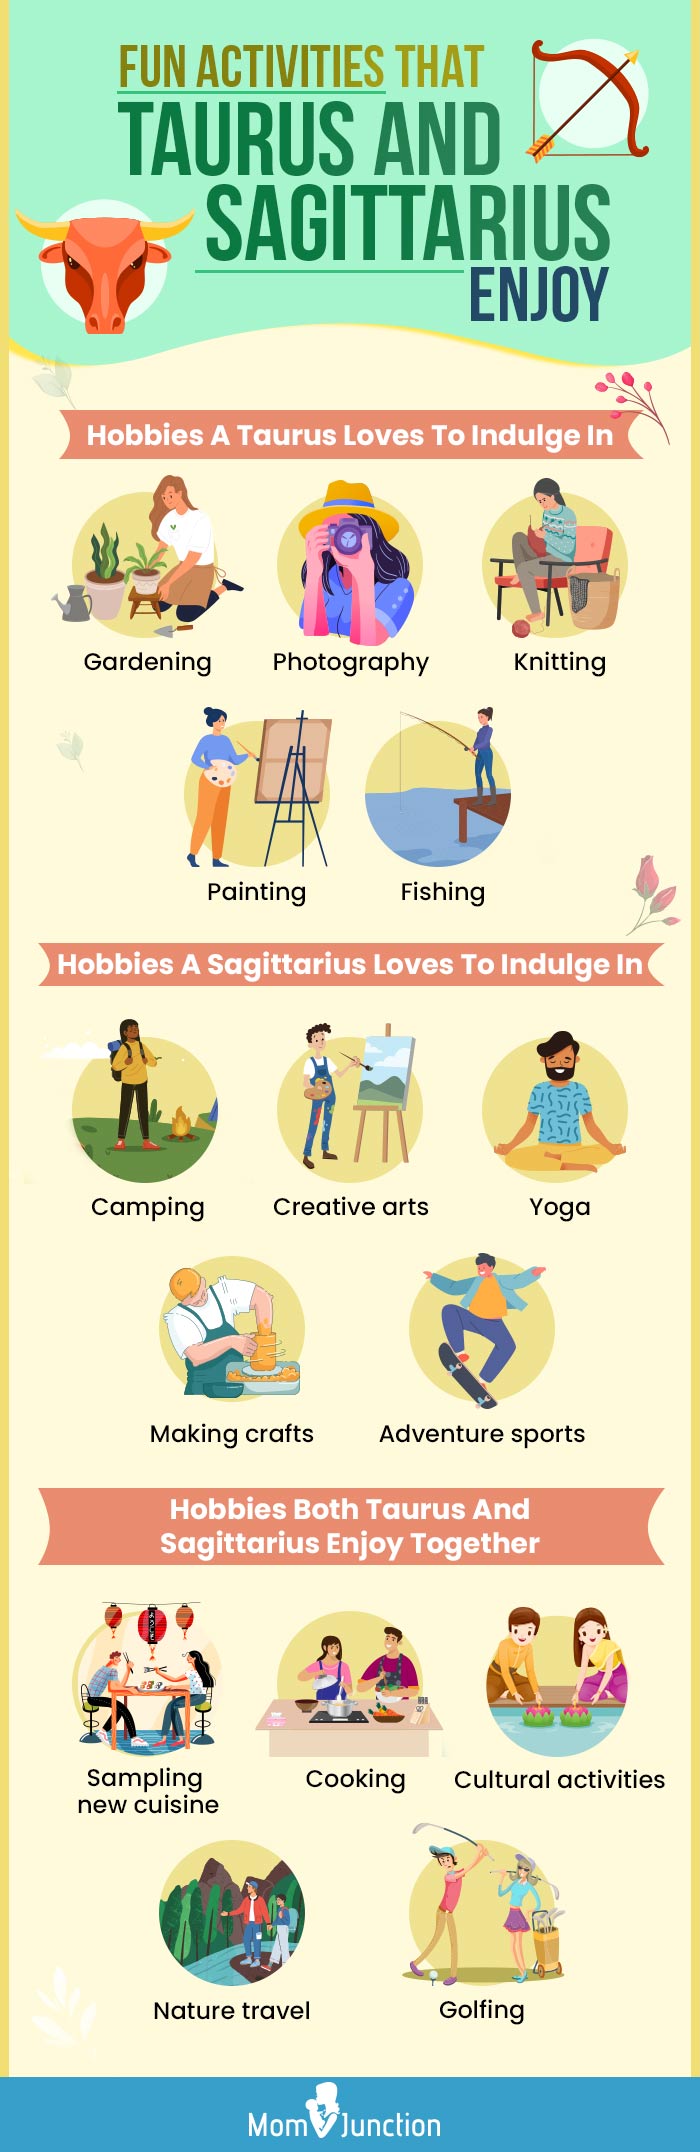 fun activities that taurus and sagittarius enjoys (infographic)